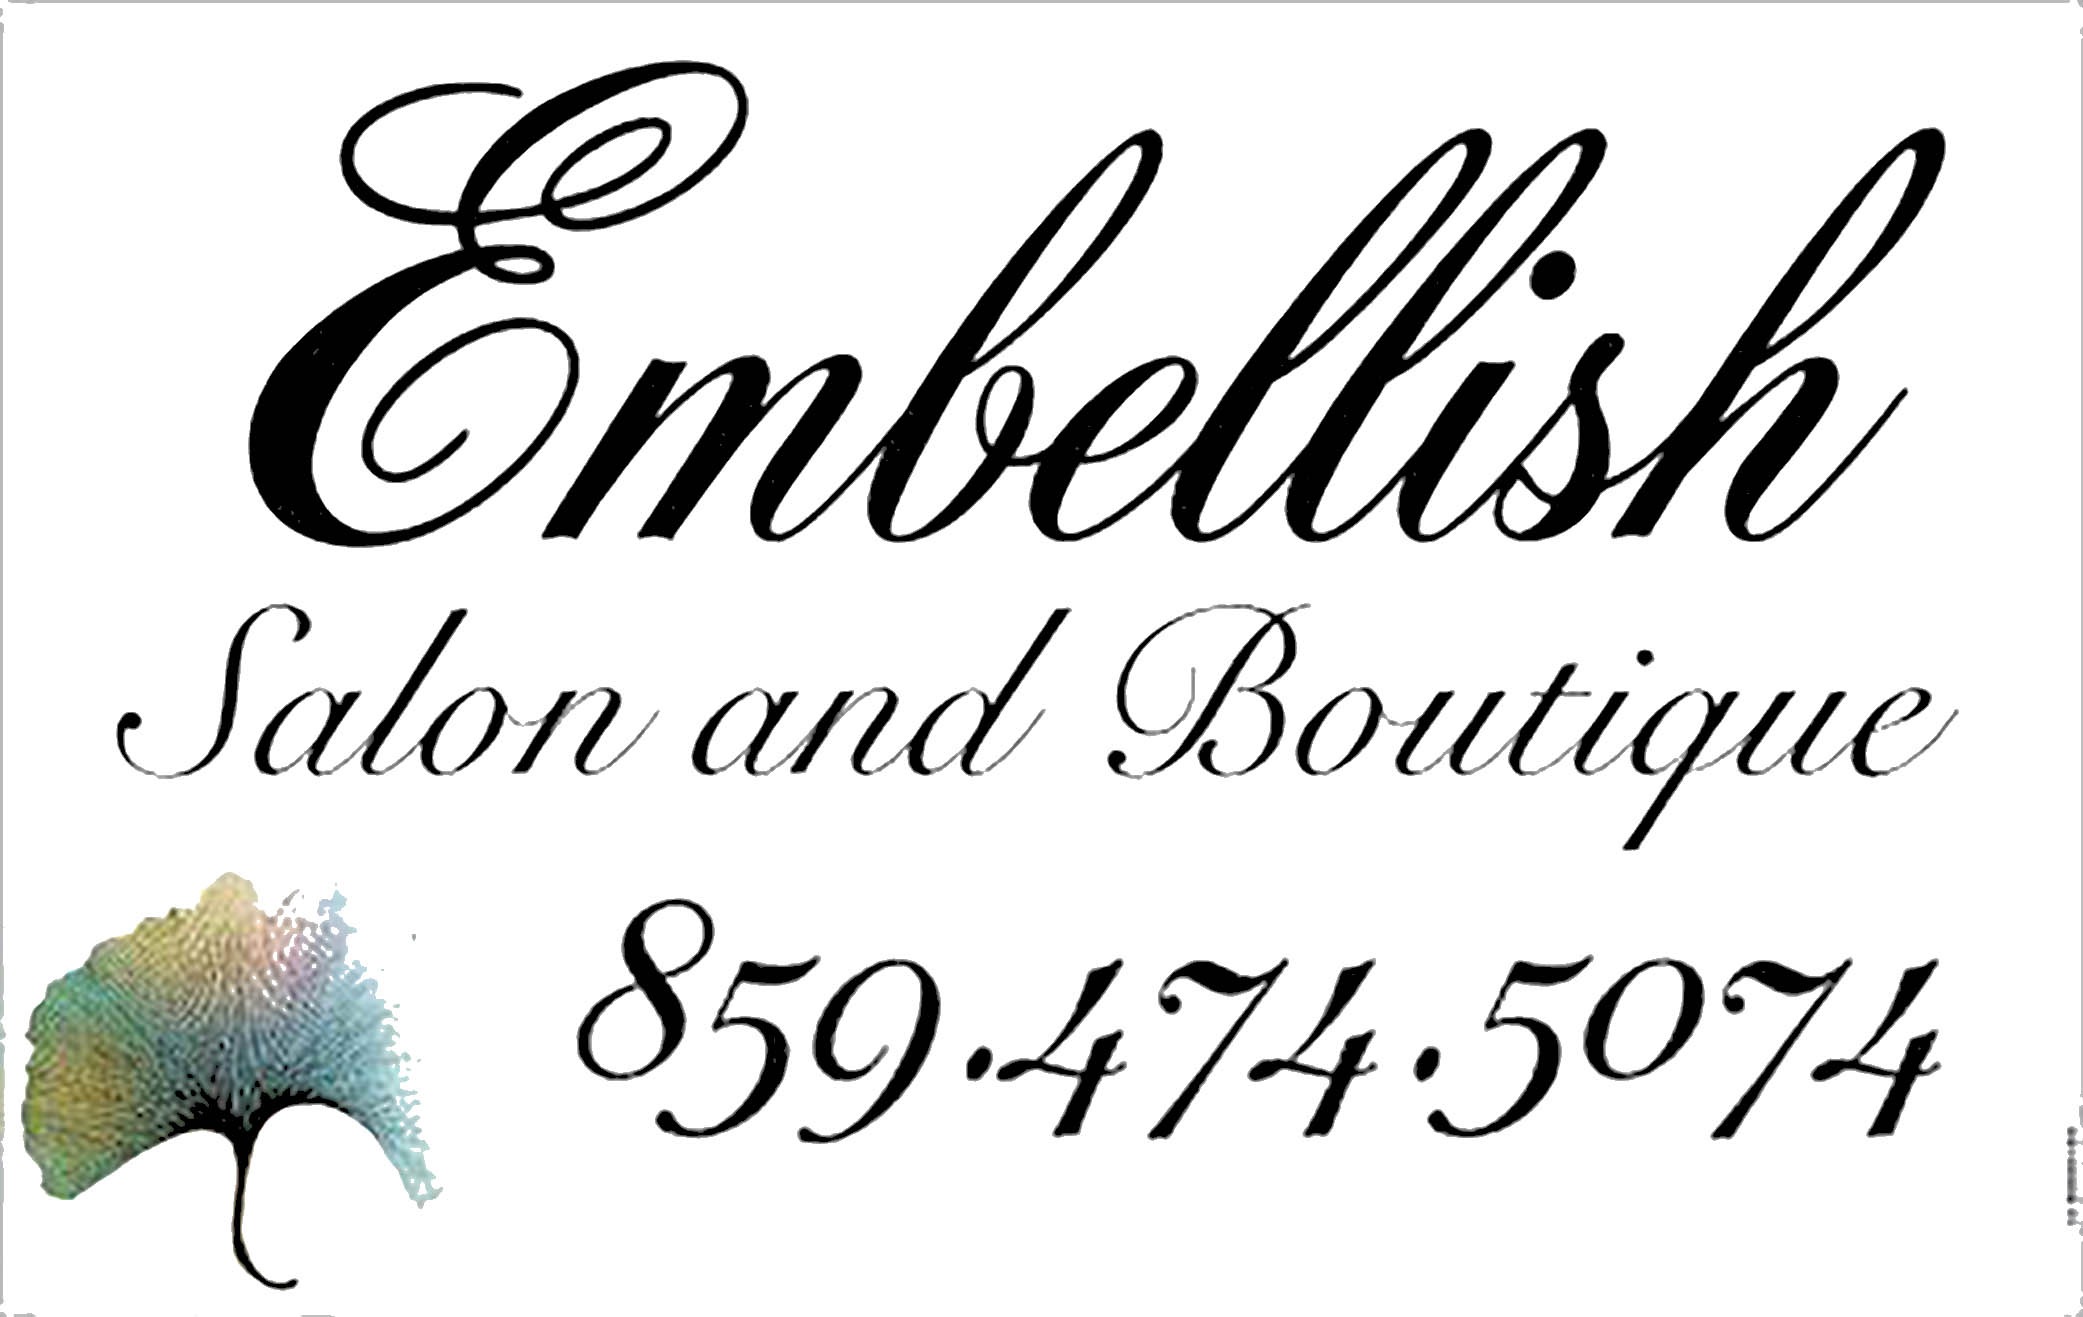 Embellish Salon and Boutique